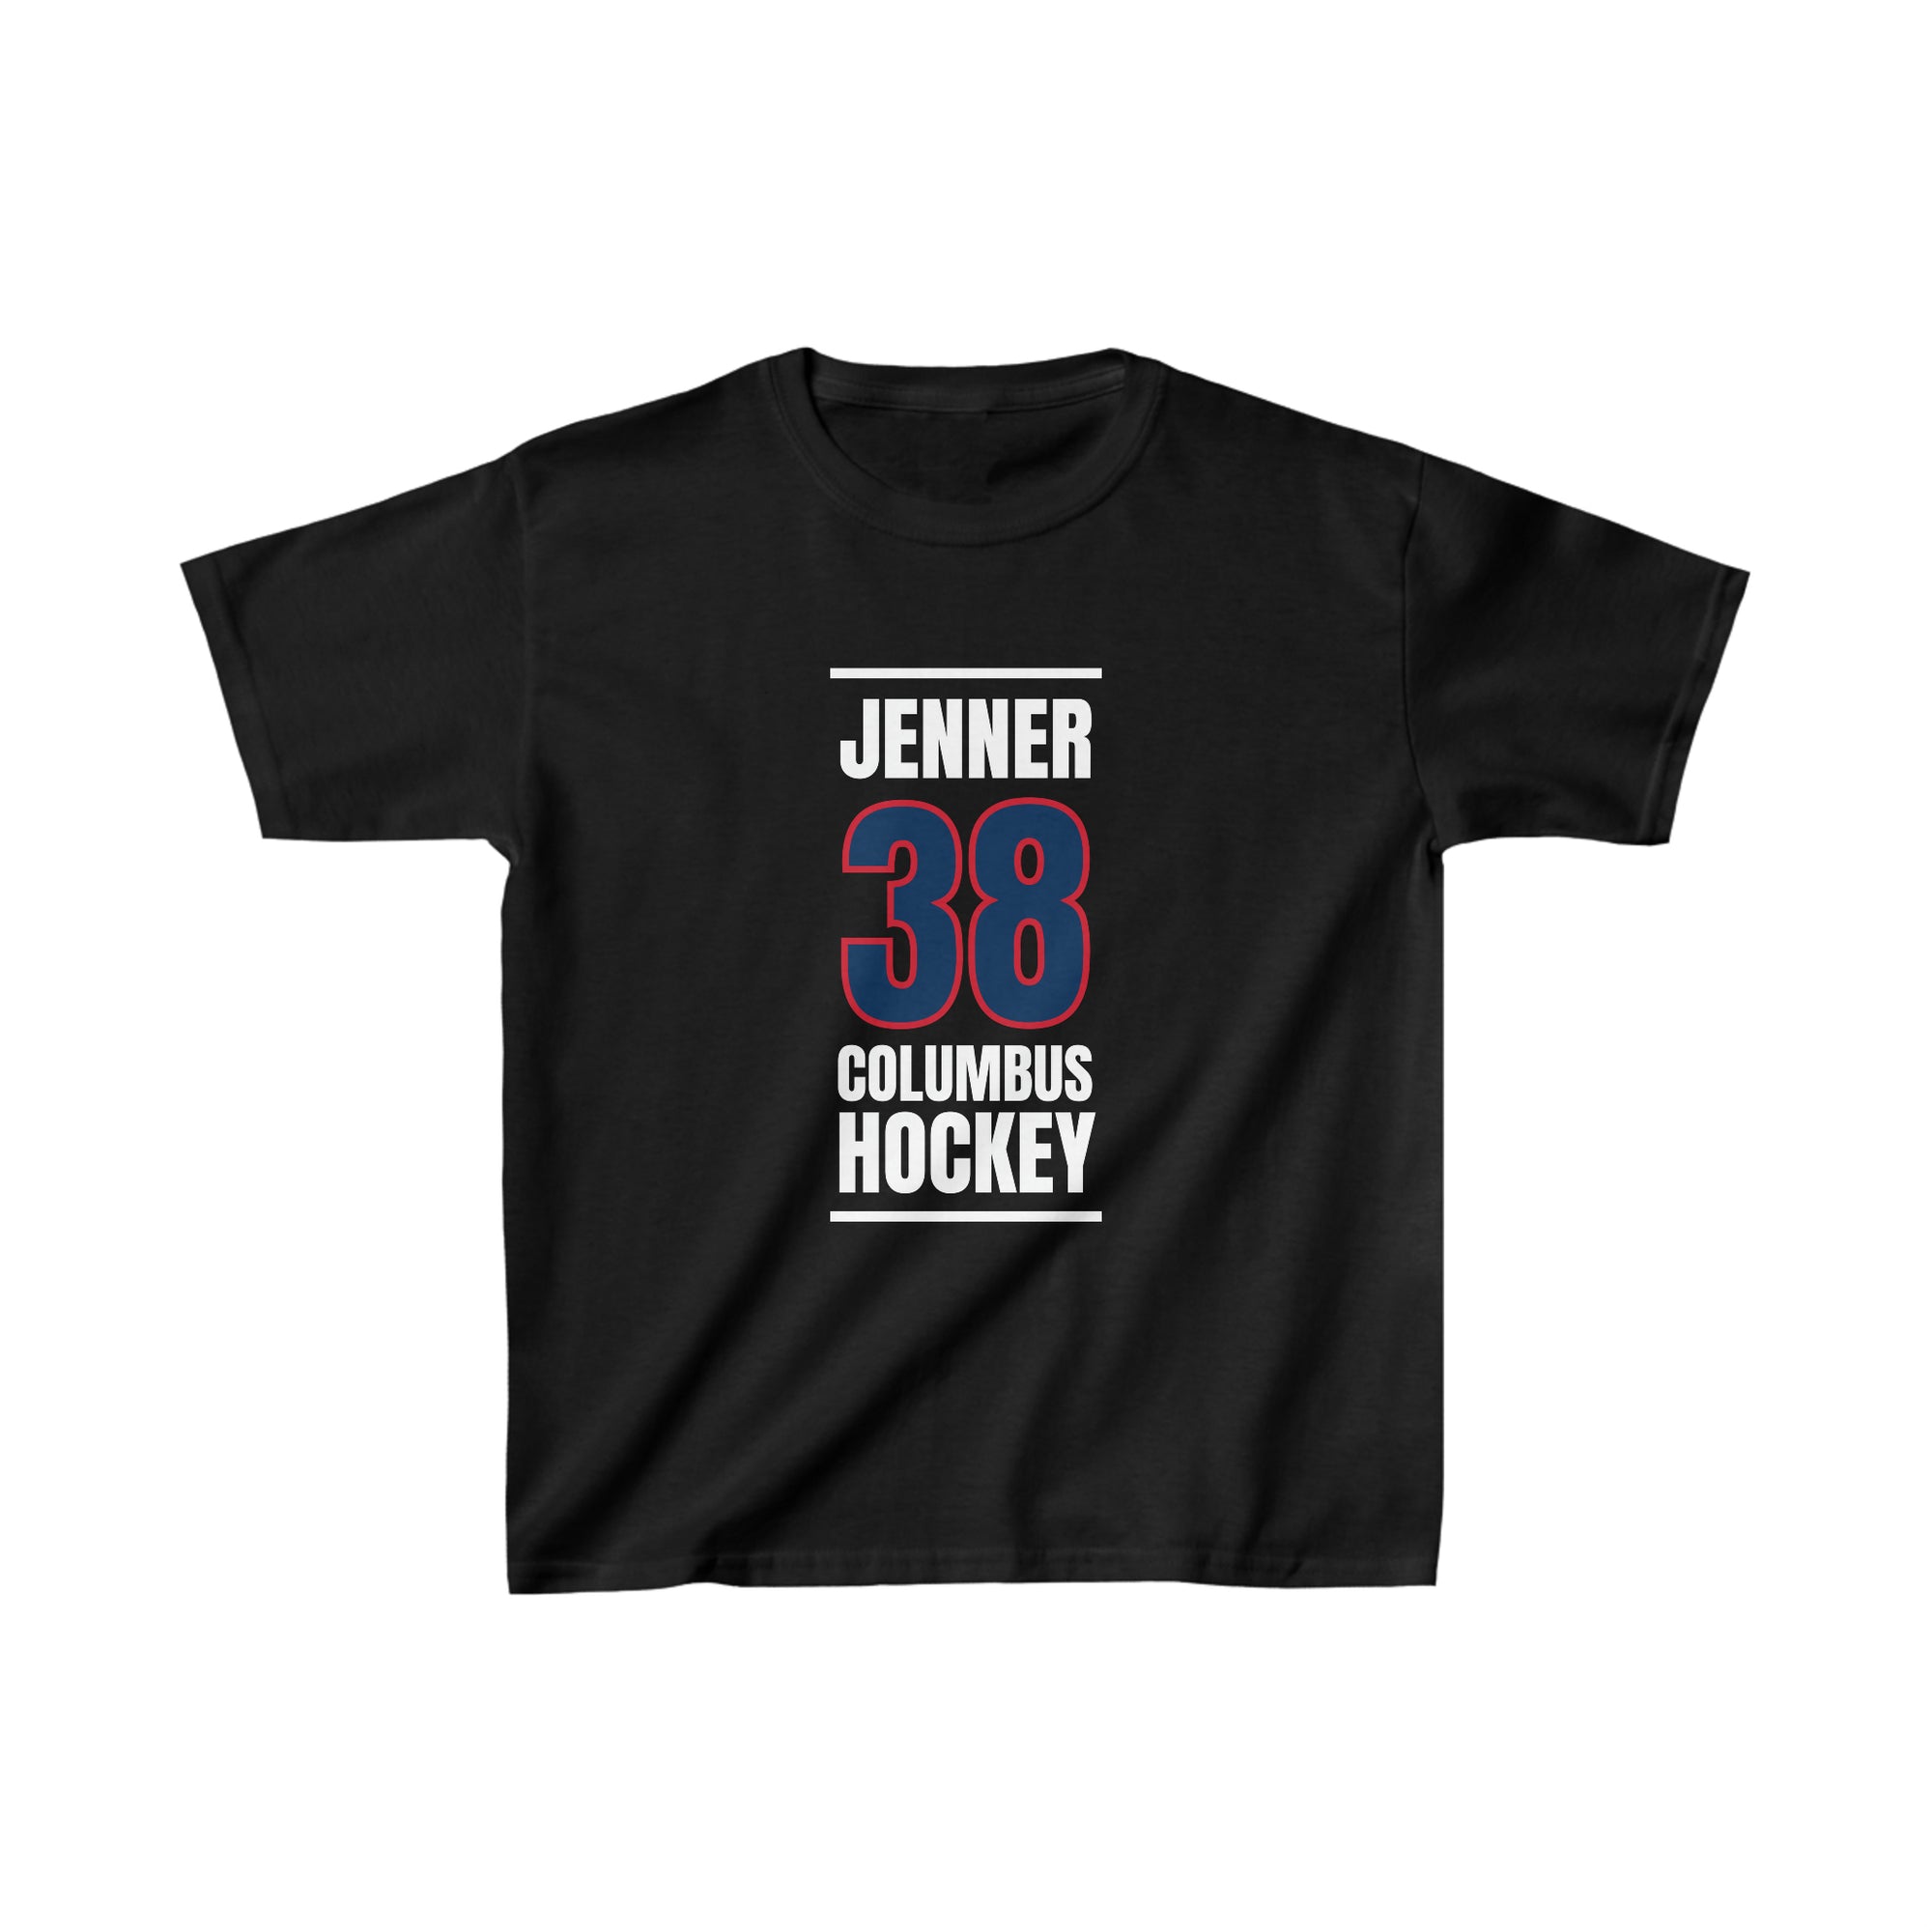 Jenner 38 Columbus Hockey Union Blue Vertical Design Kids Tee